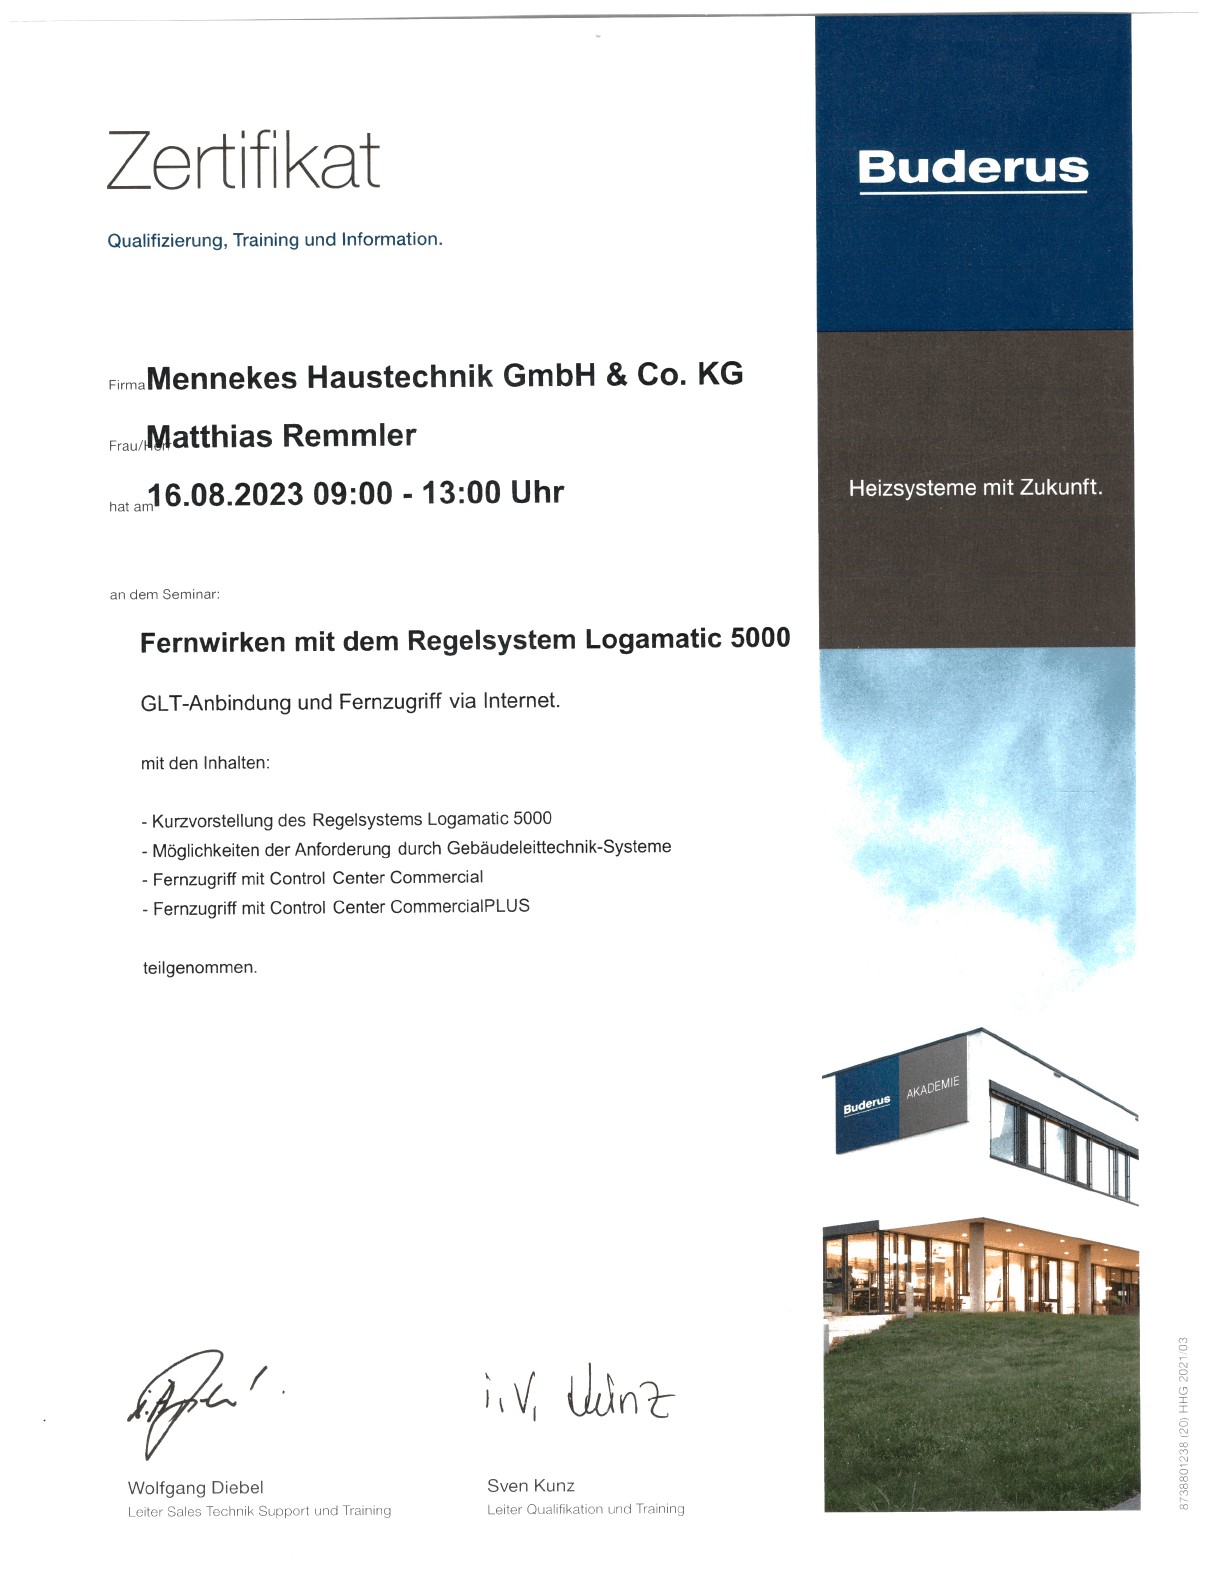 Mennekes Haustechnik GmbH & Co.KG - Zertifikate 2